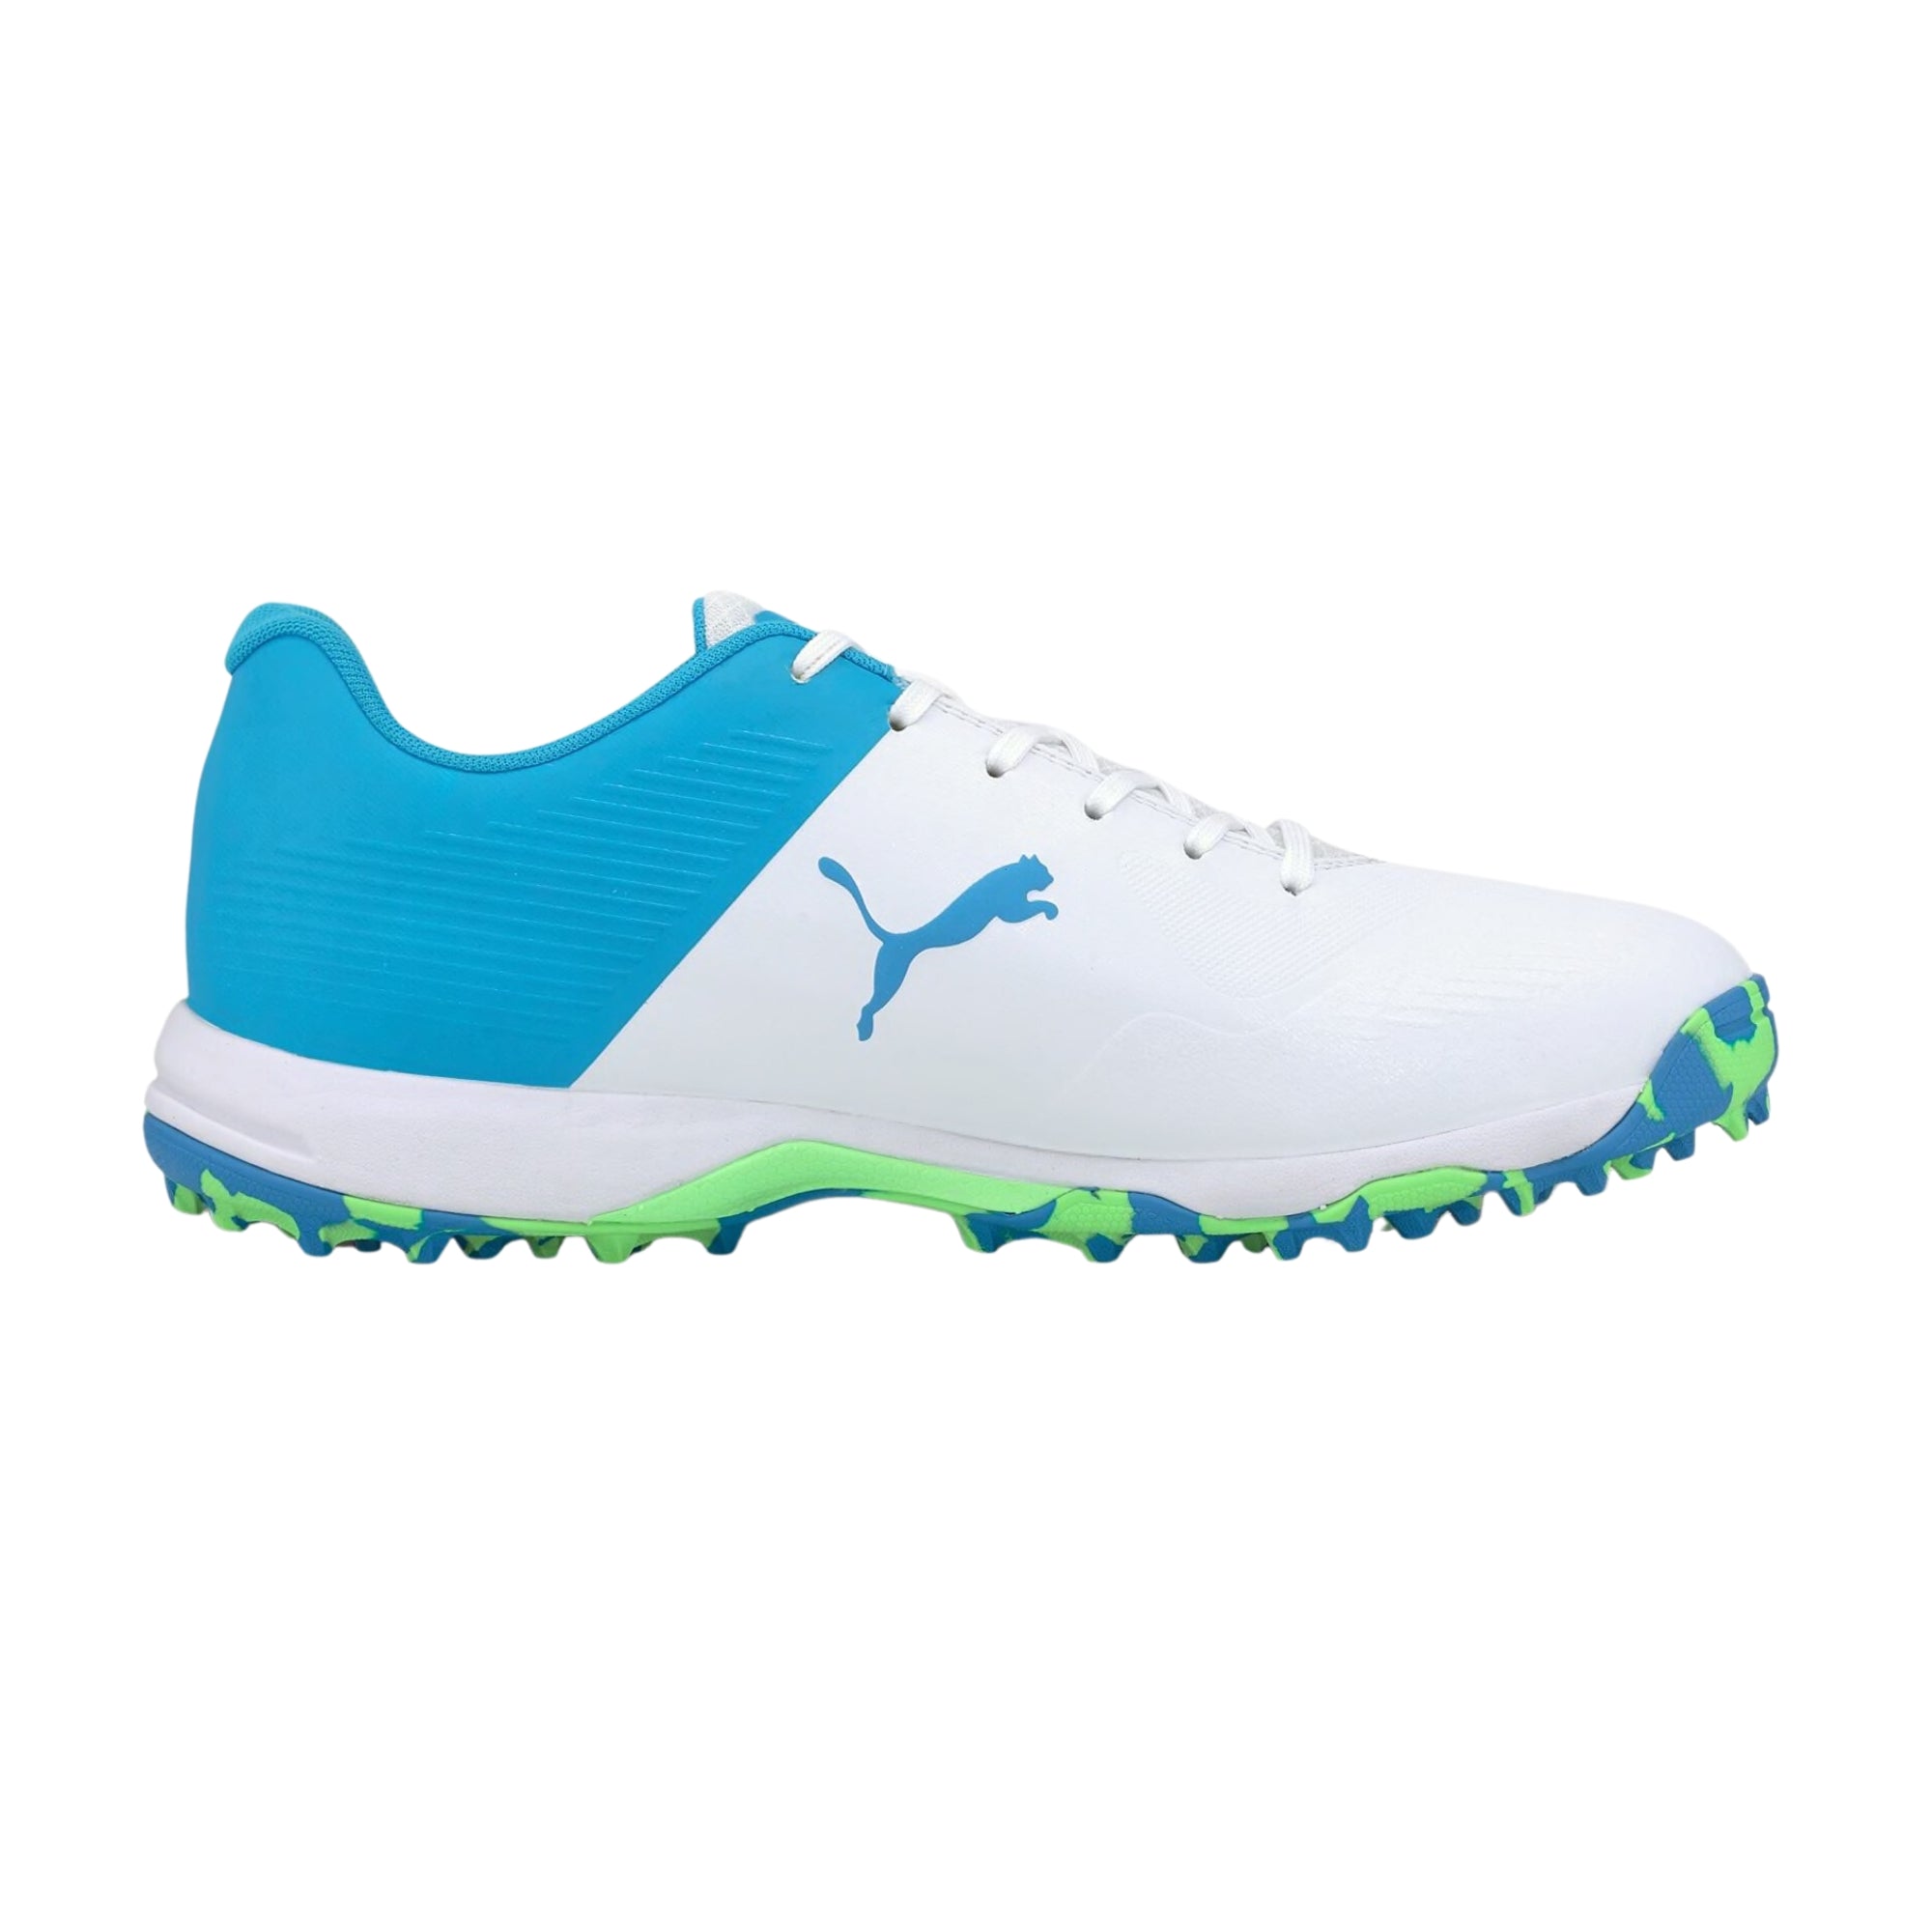 Puma Cricket Shoes One 8, Blue/Green